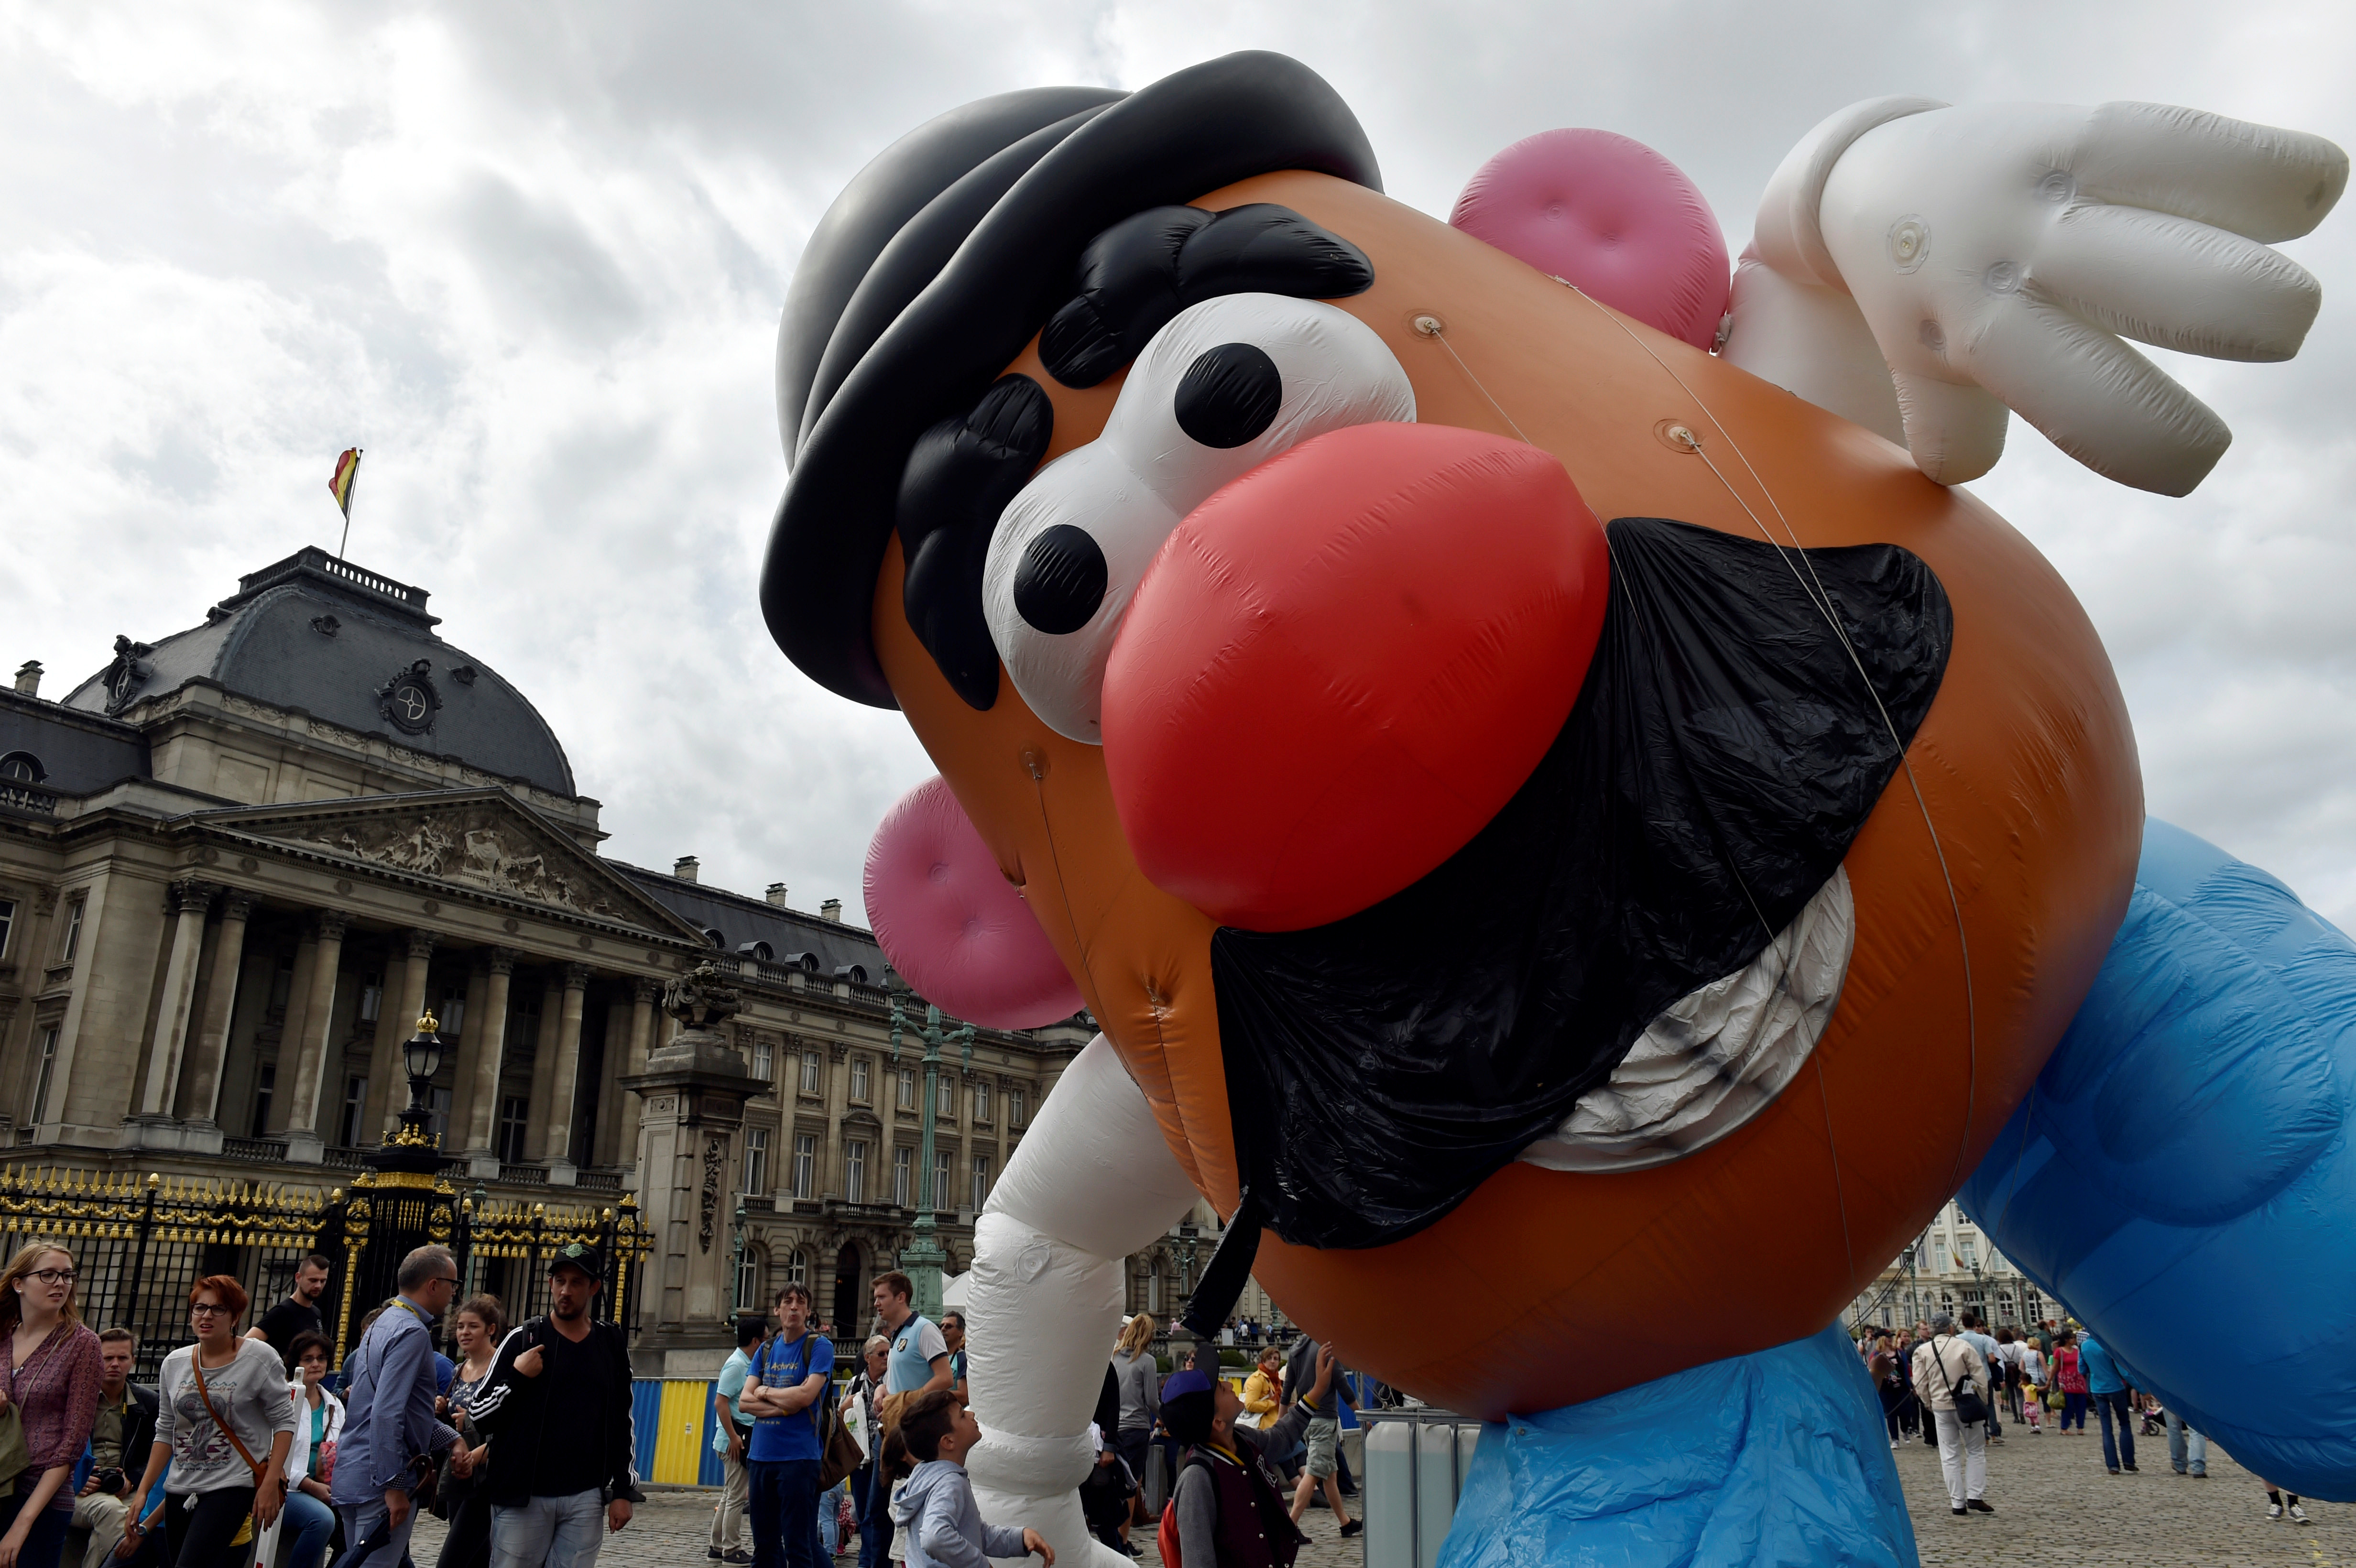 A mister no more: Mr. Potato Head goes gender-neutral